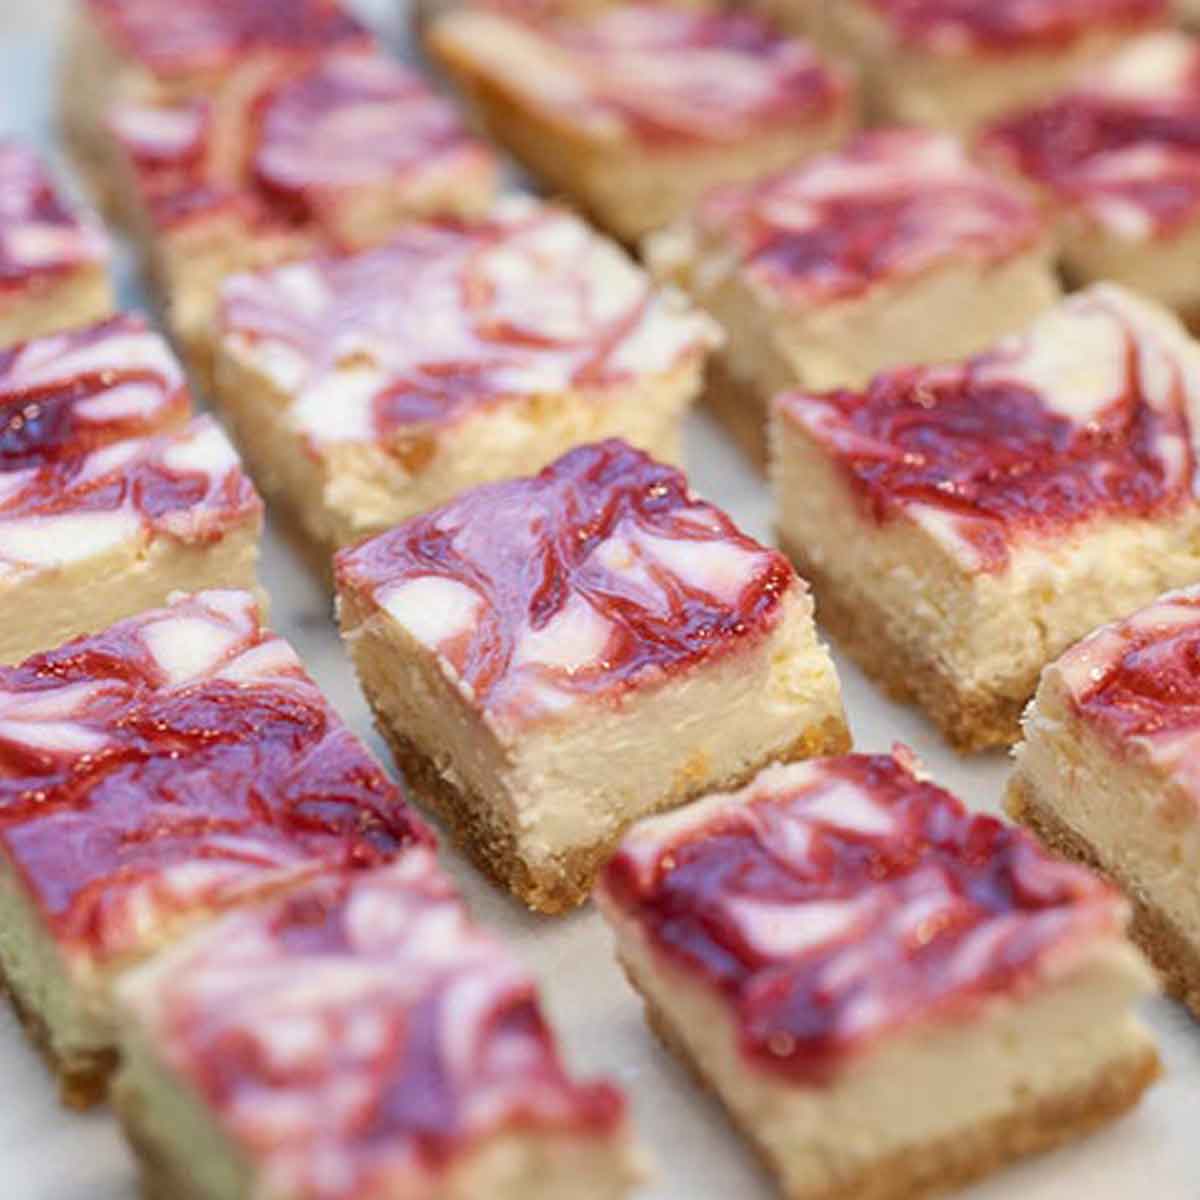 Raspberry marbled lemon cheesecake bars on a marble table.